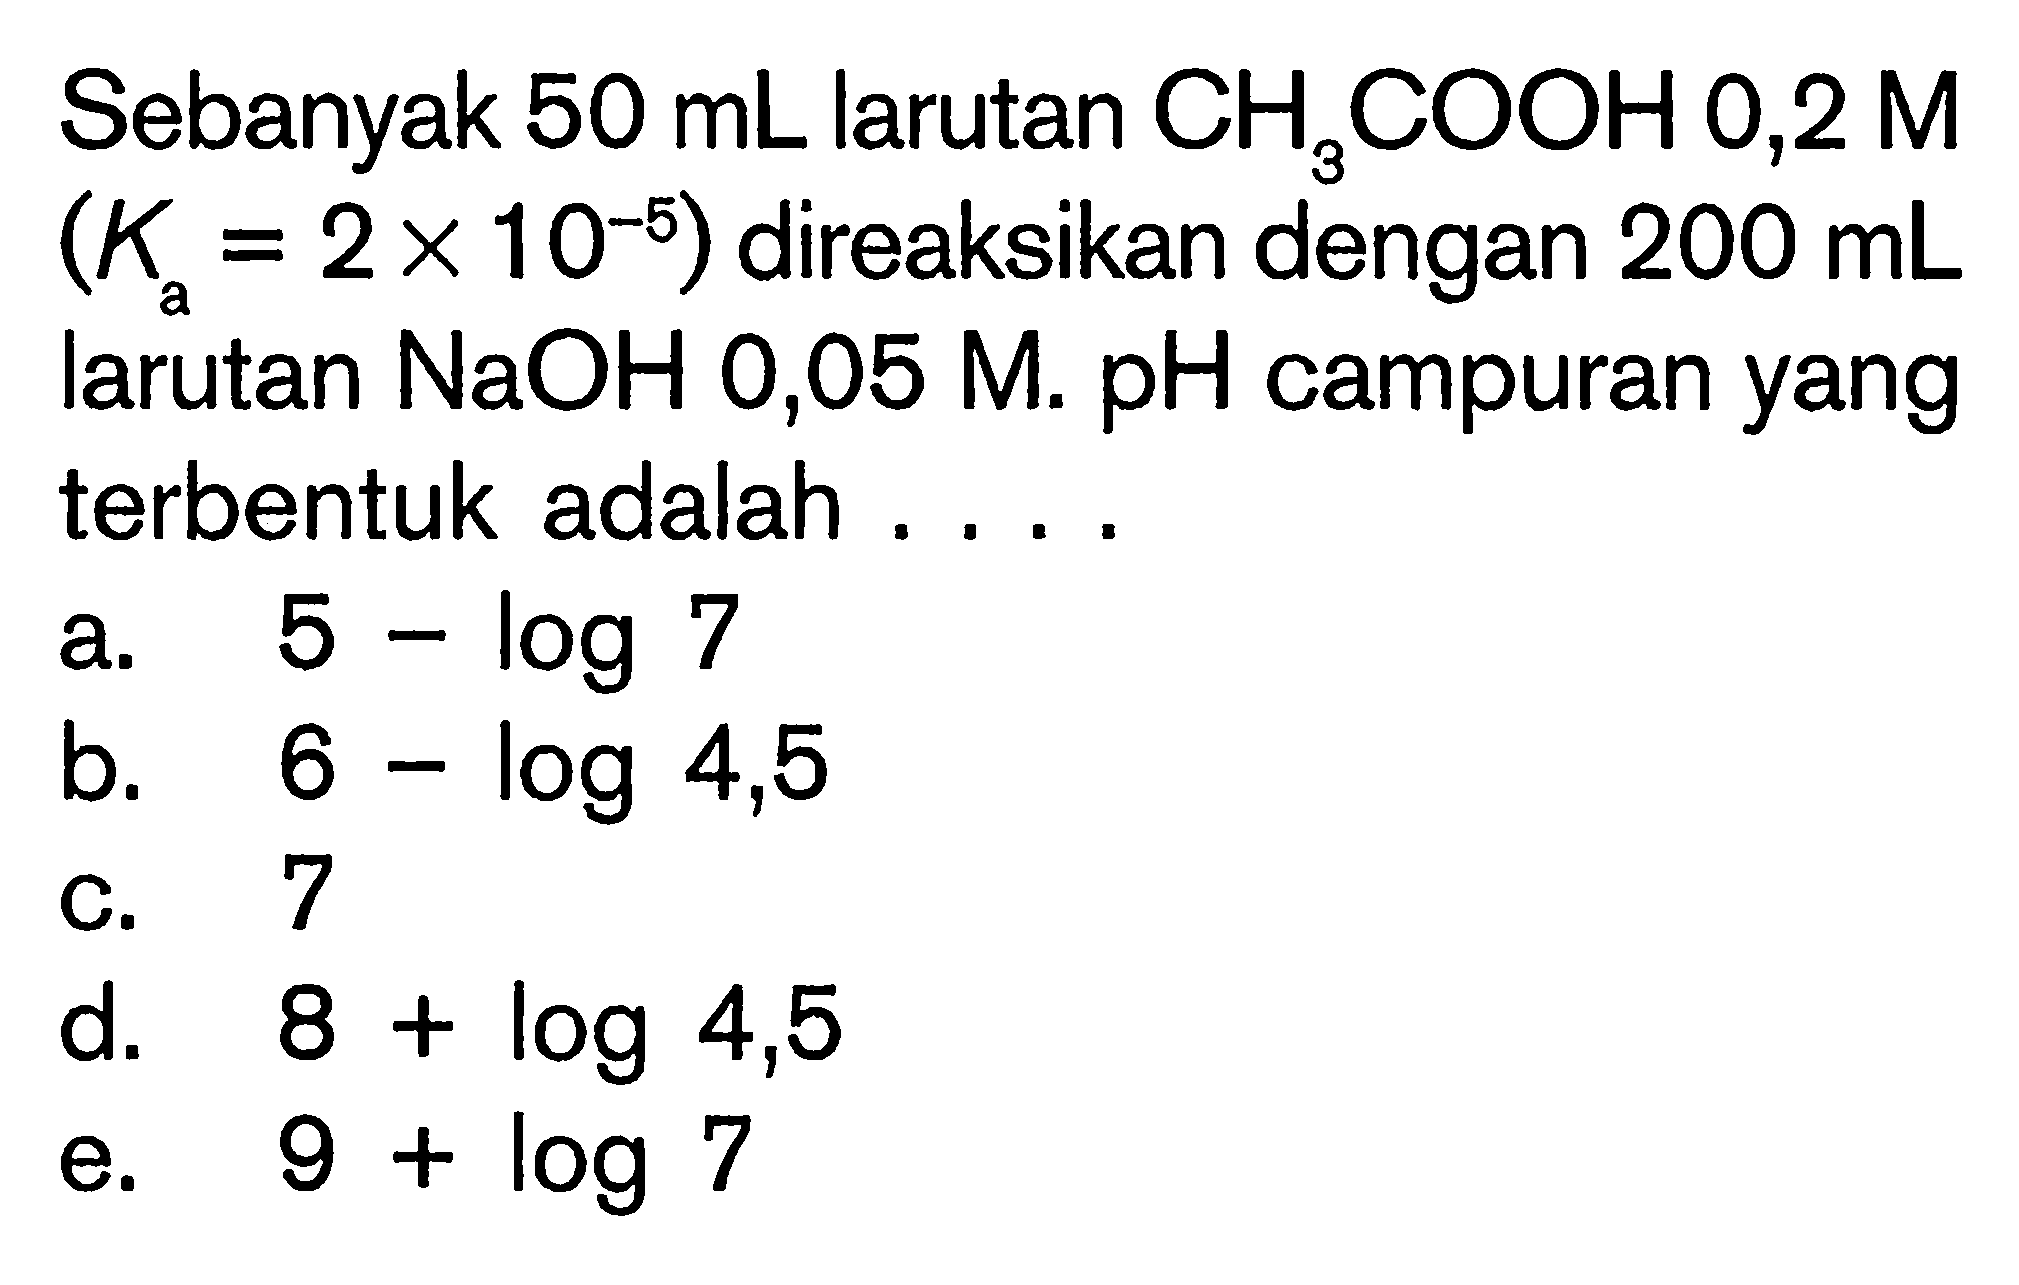 Sebanyak 50mL larutan CH3COOH 0,2 M (Ka=2 x 10^-5) direaksikan dengan 200mL larutan NaOH 0,05 M. pH campuran yang terbentuk adalah ....